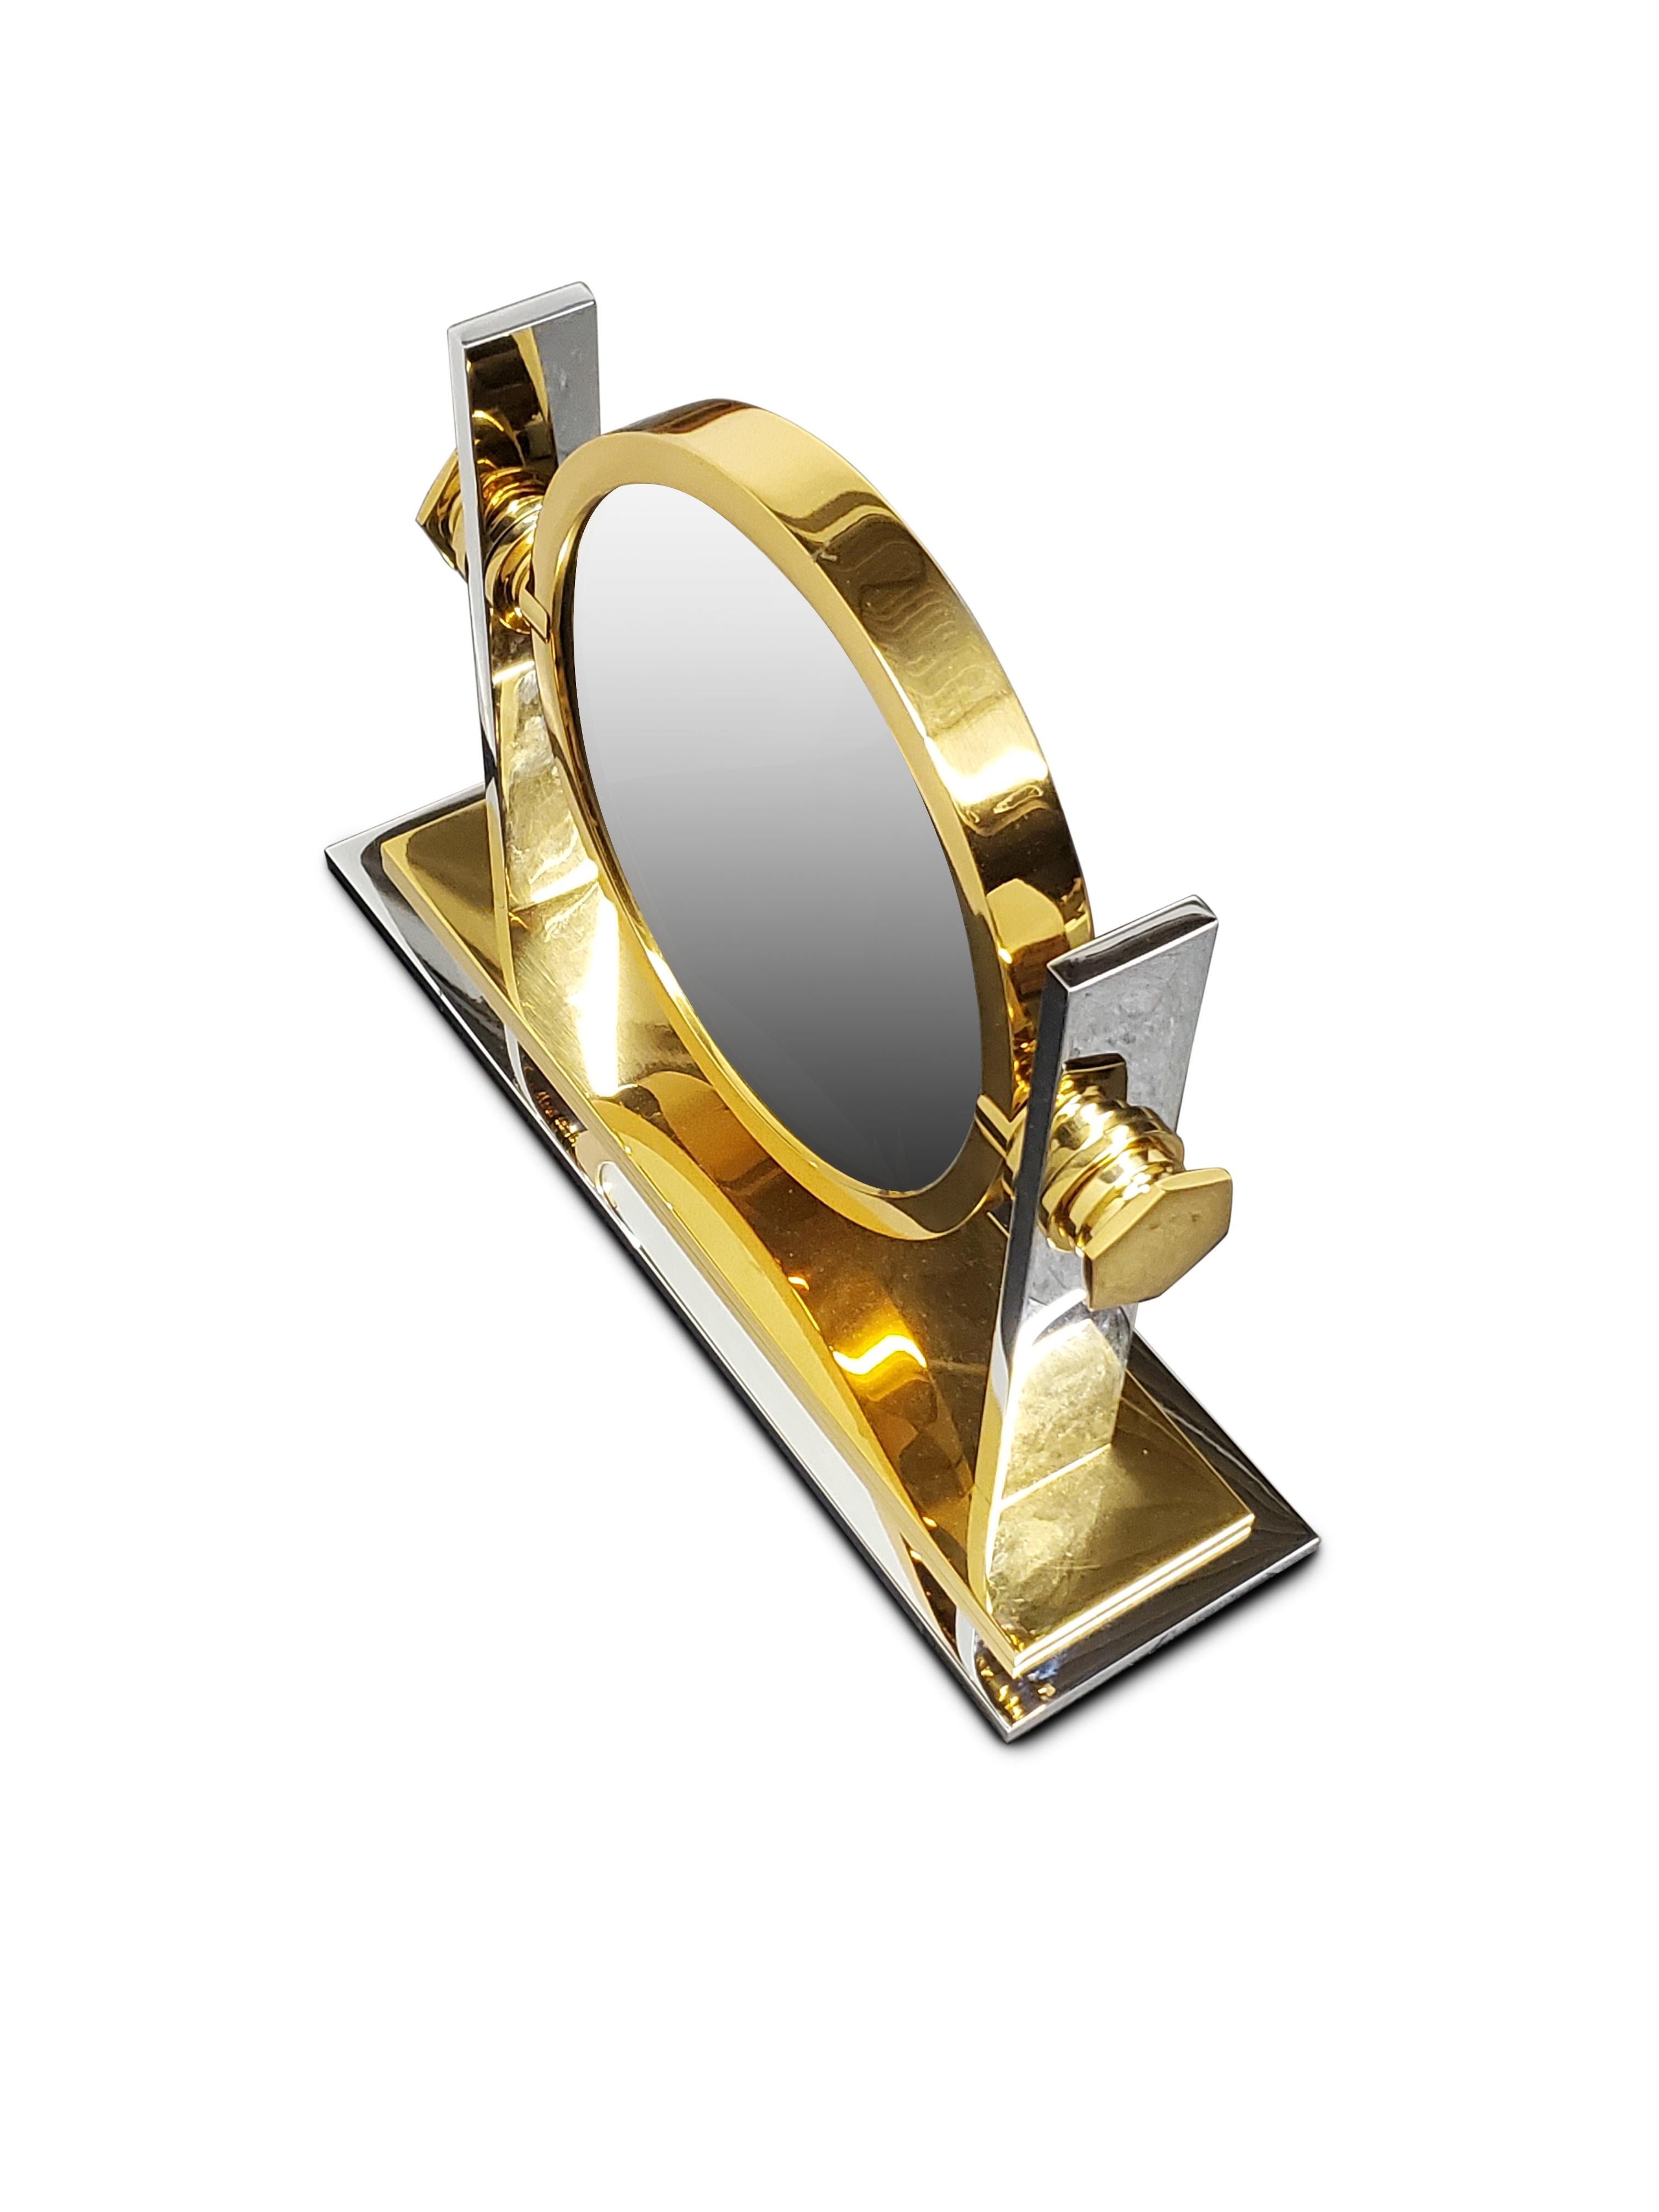 Karl Springer Brass and Nickel Vanity Mirror For Sale 3